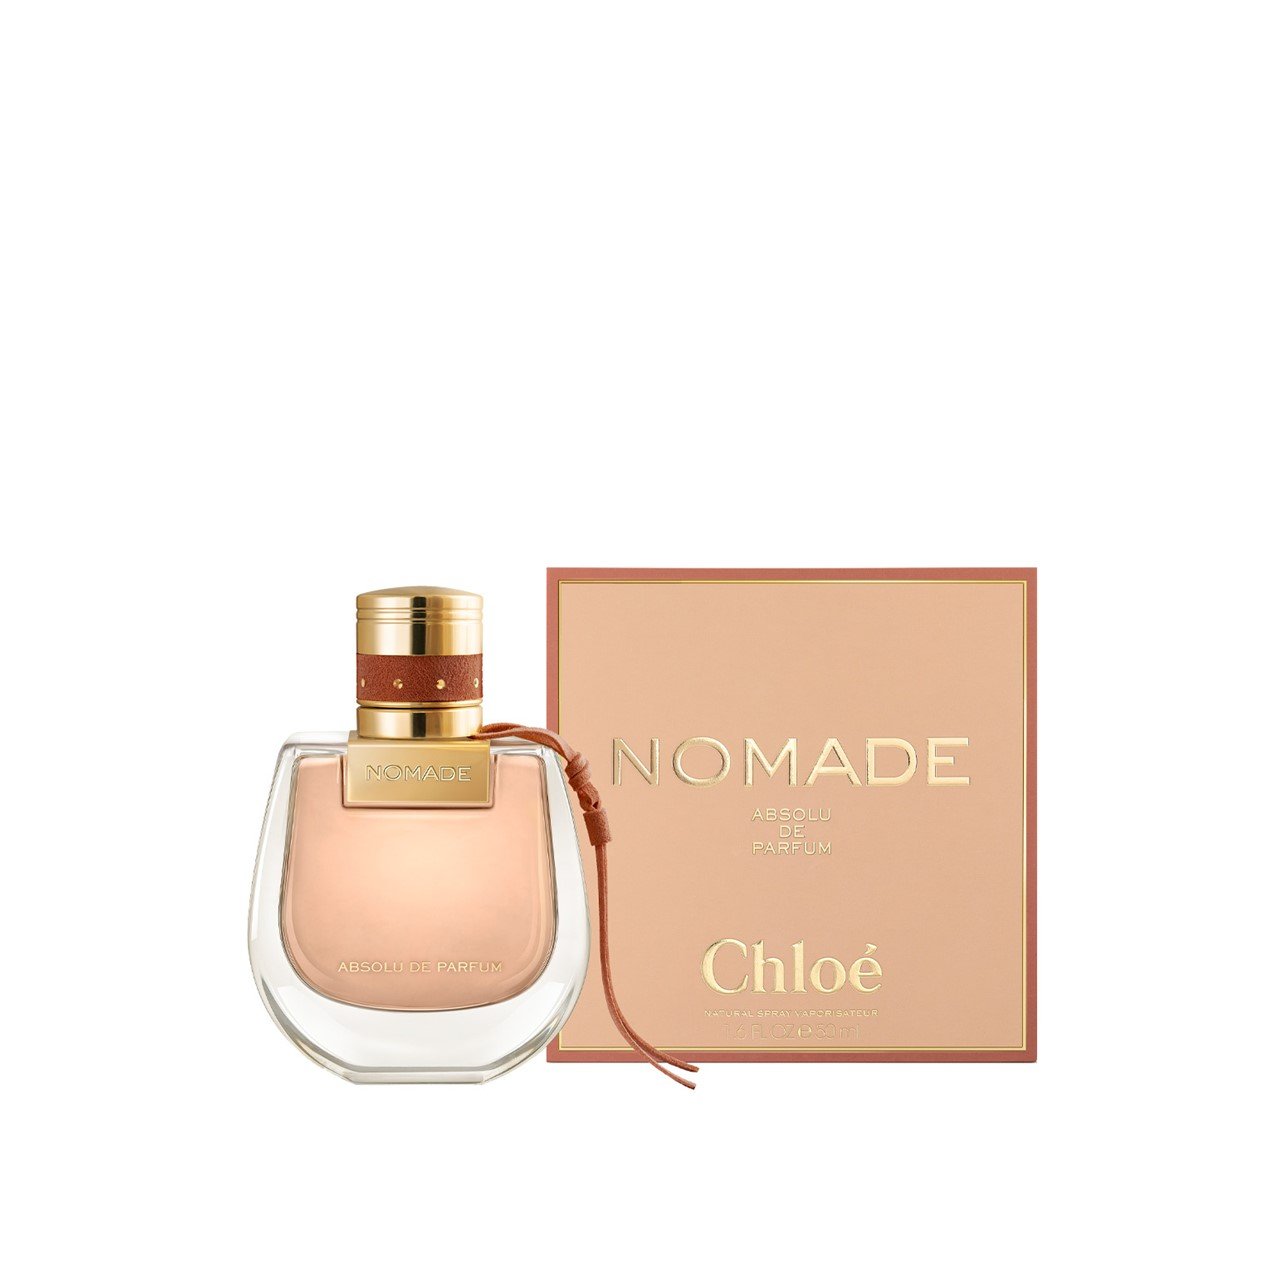 Chloé Nomade Absolu Eau de Parfum 50ml